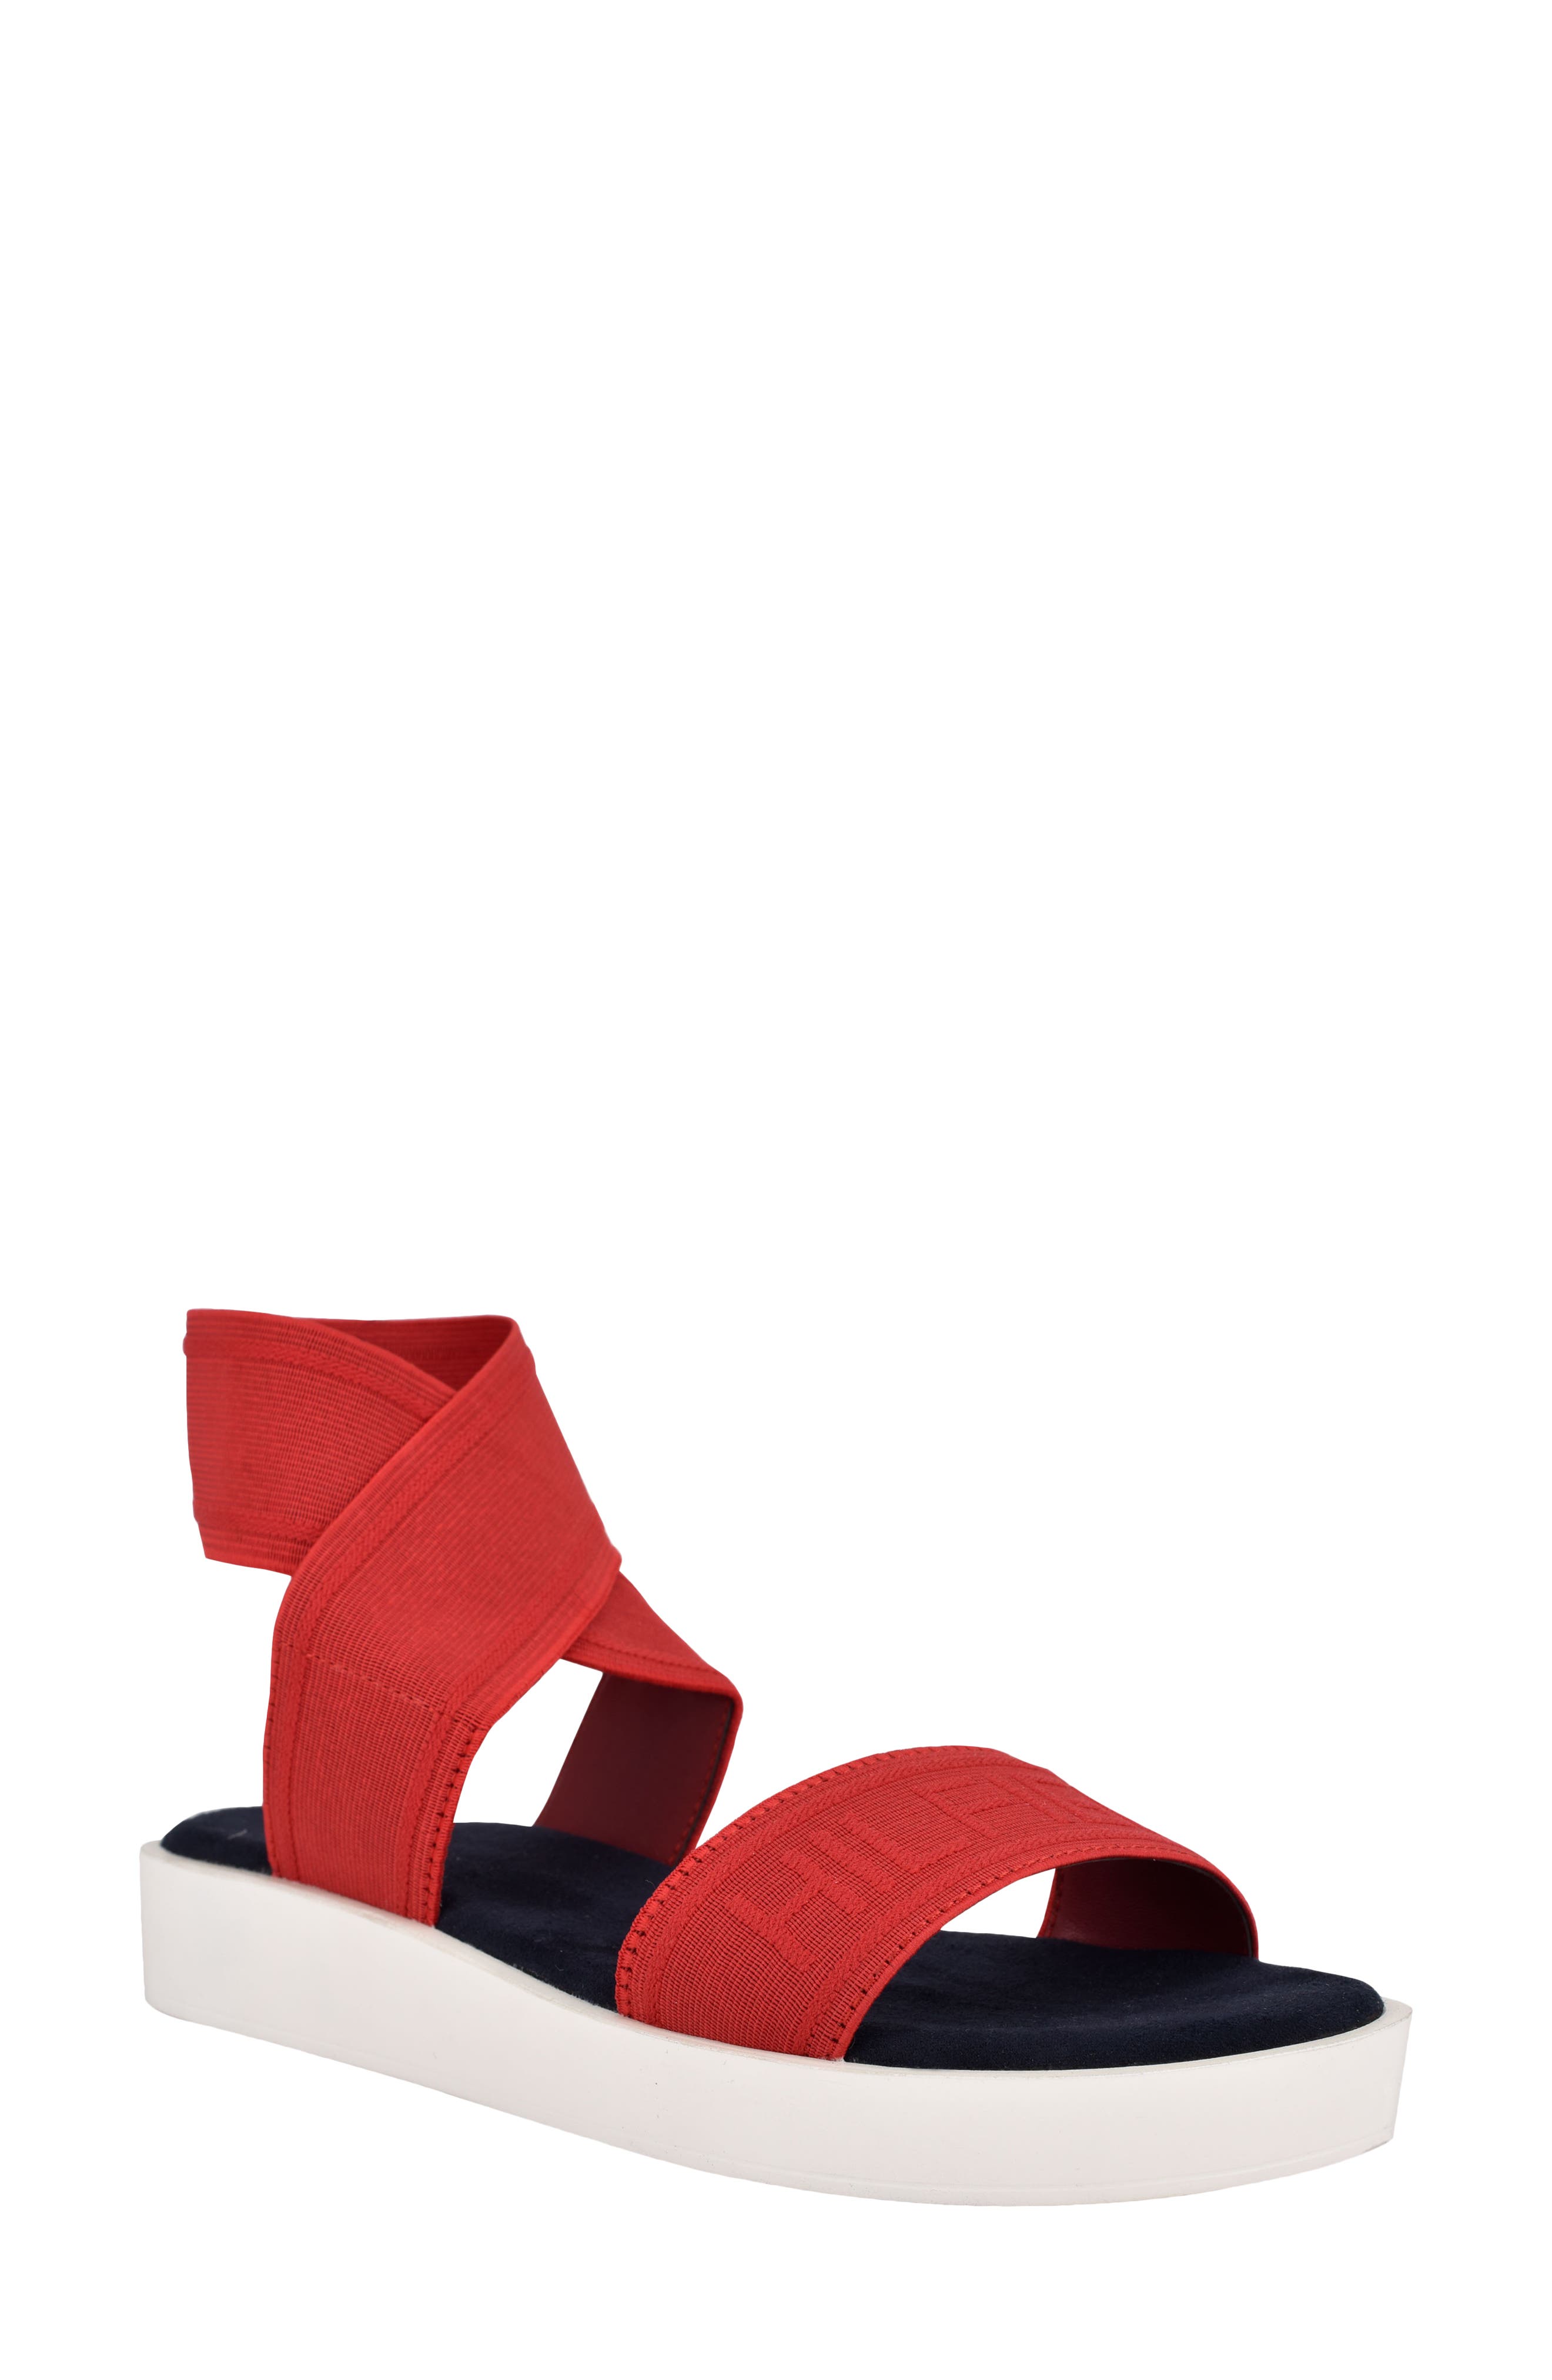 UPC 195182659464 product image for Women's Tommy Hilfiger Springi Ankle Strap Sandal, Size 7 M - Red | upcitemdb.com